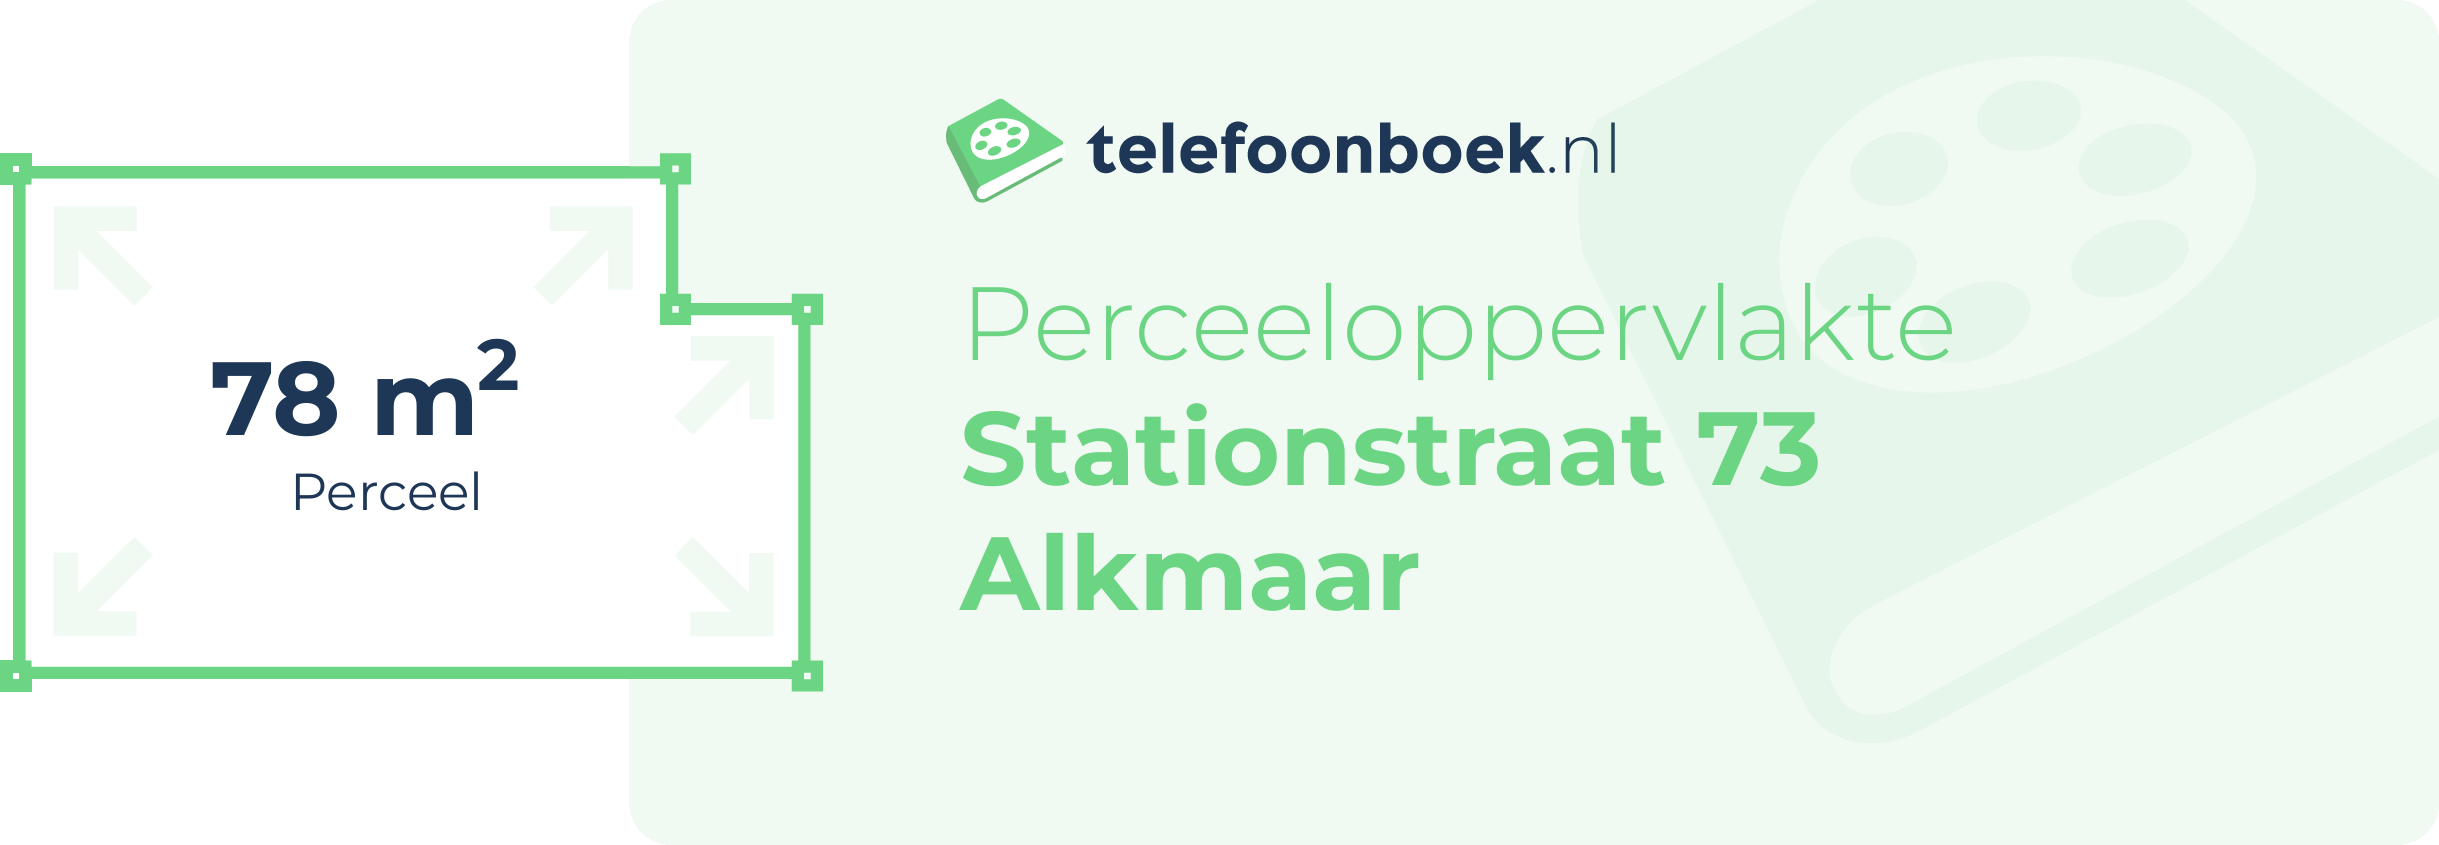 Perceeloppervlakte Stationstraat 73 Alkmaar